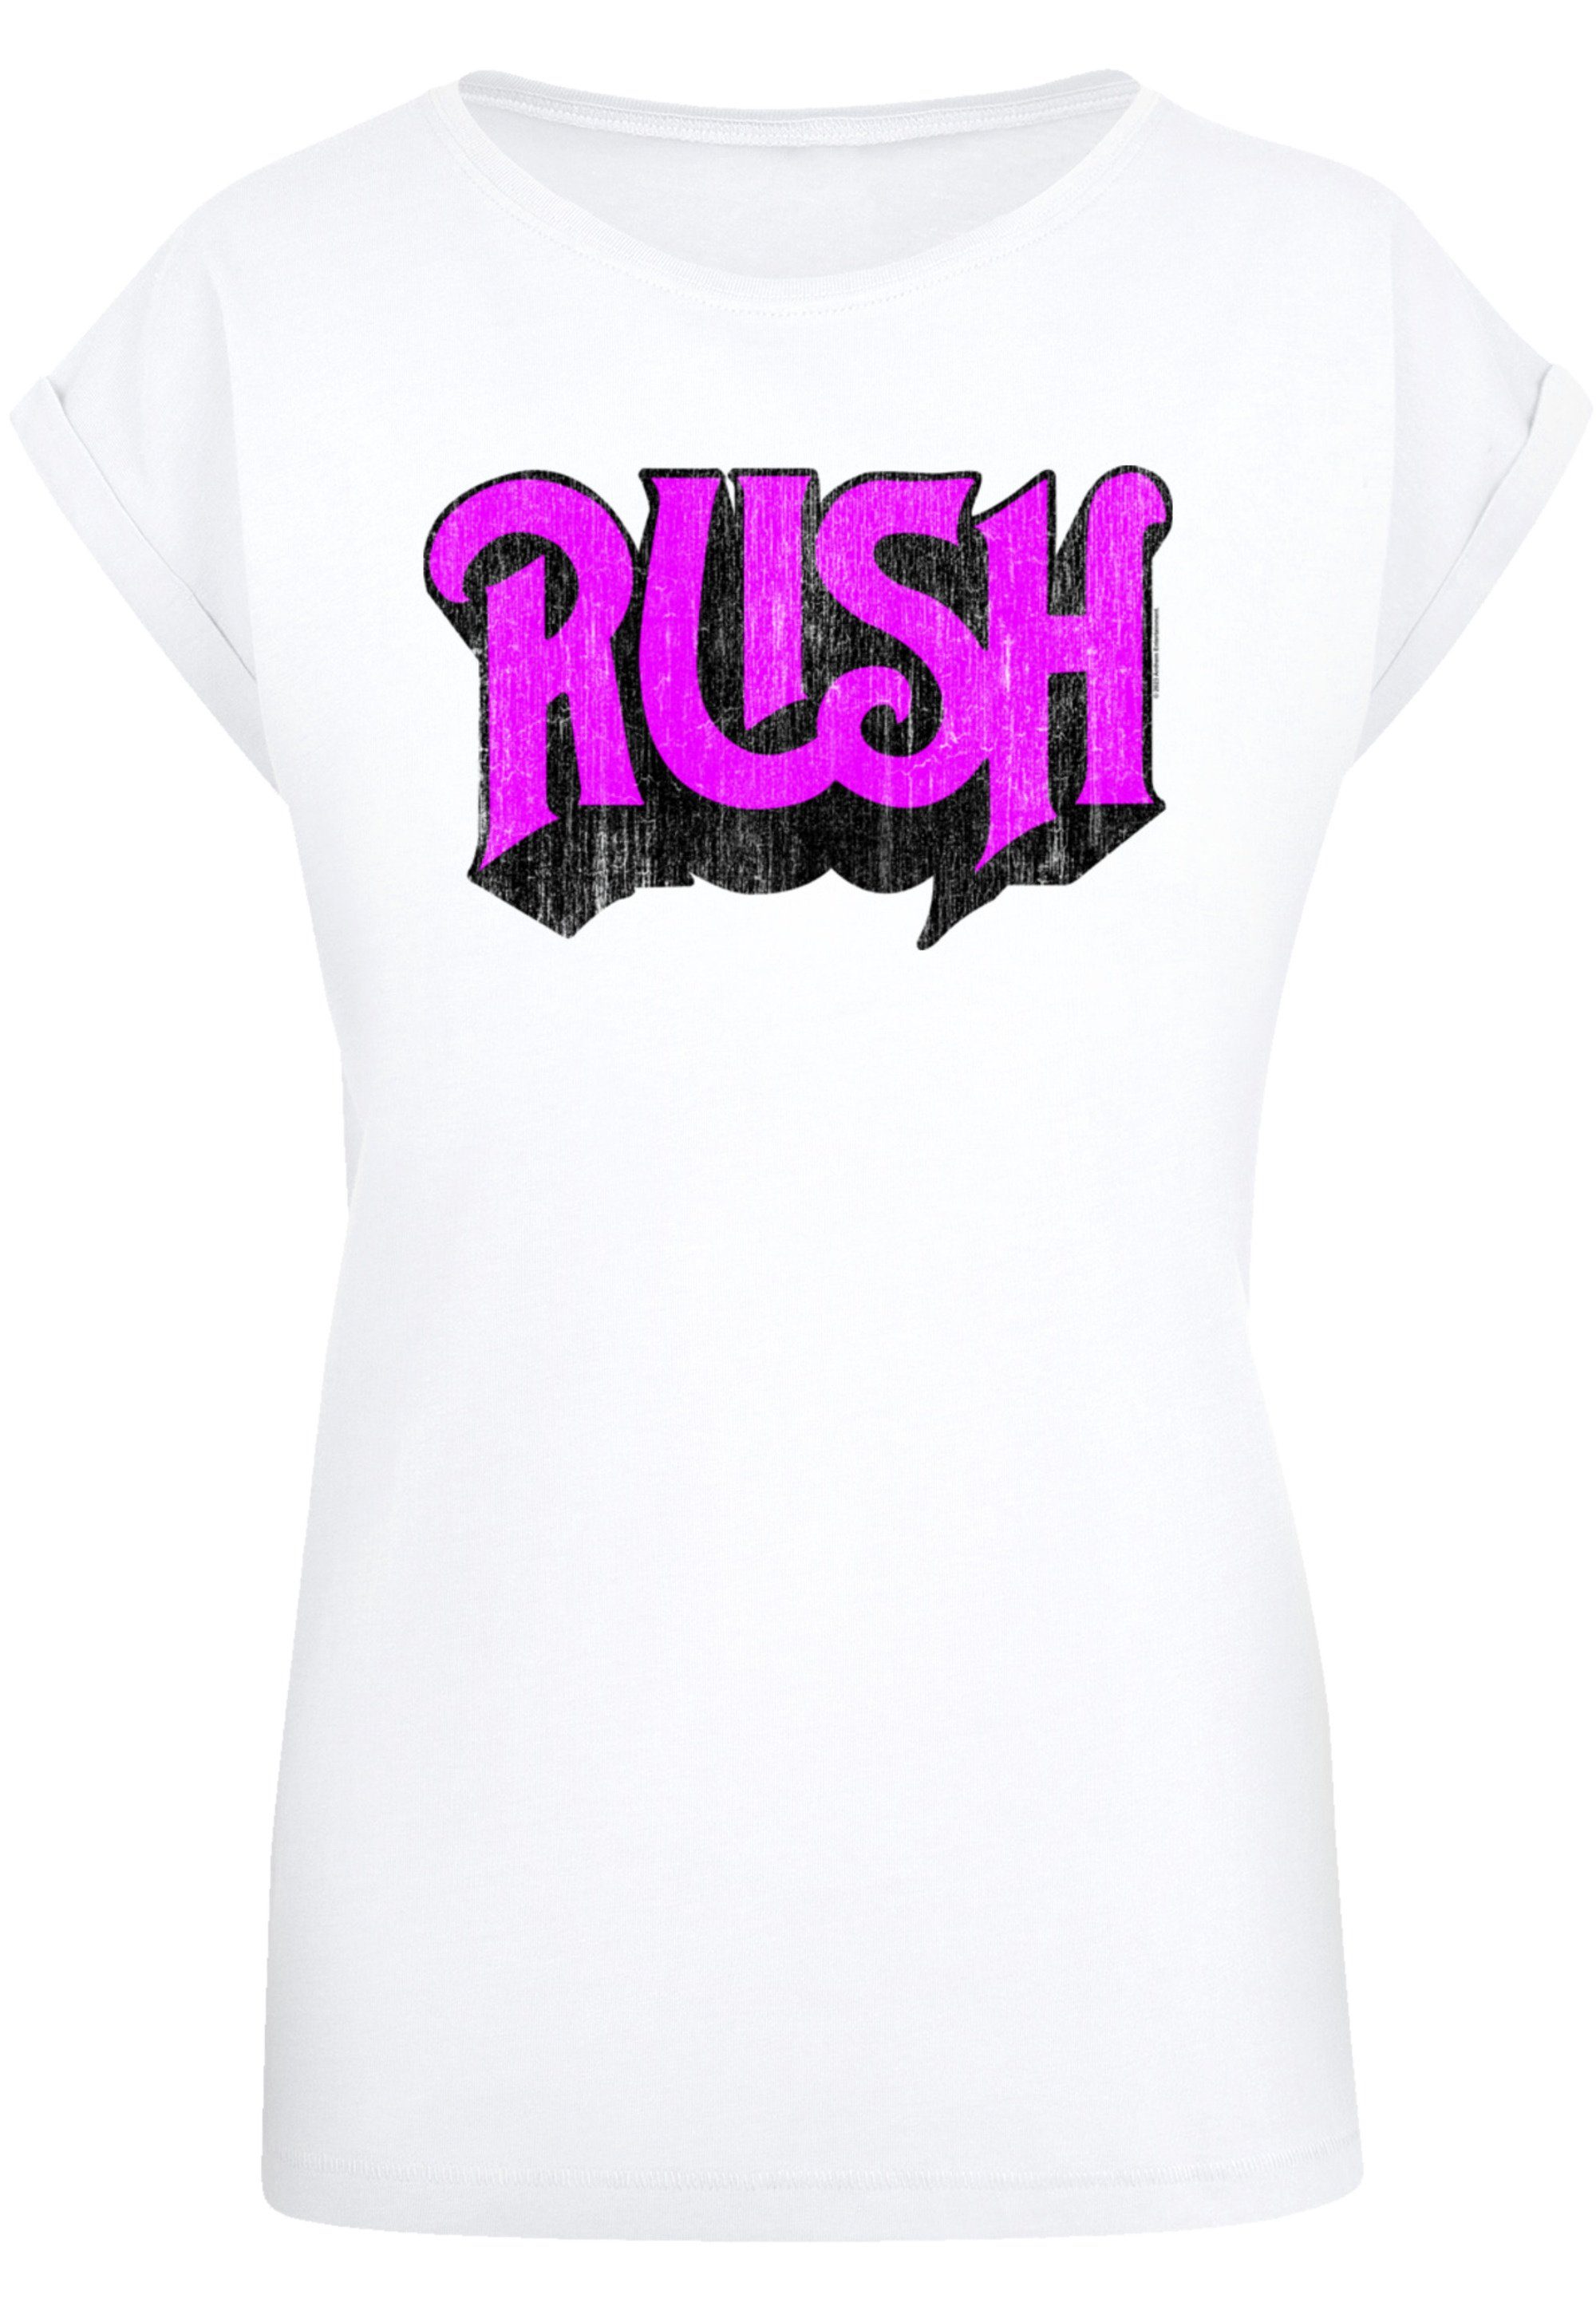 Logo T-Shirt Premium Qualität weiß F4NT4STIC Distressed Band Rock Rush